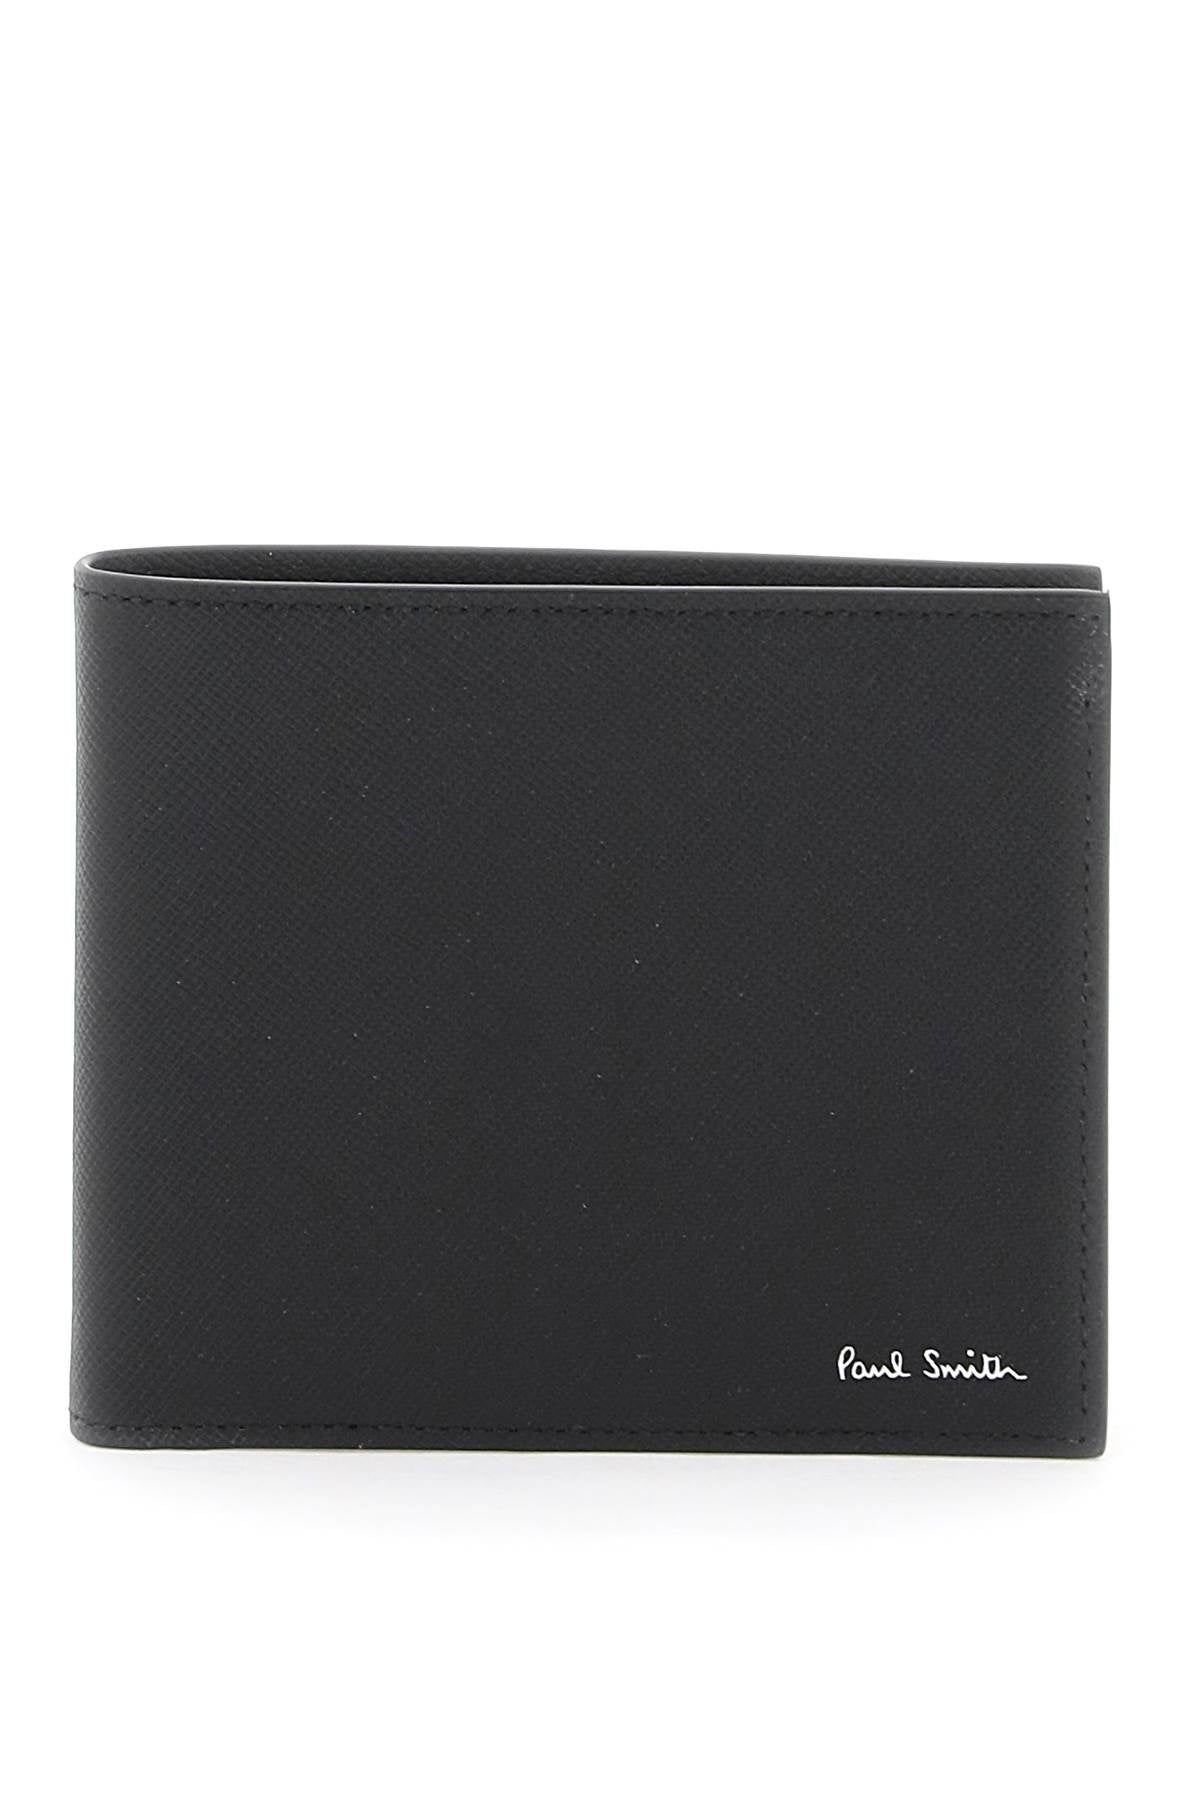 Paul smith mini blur wallet